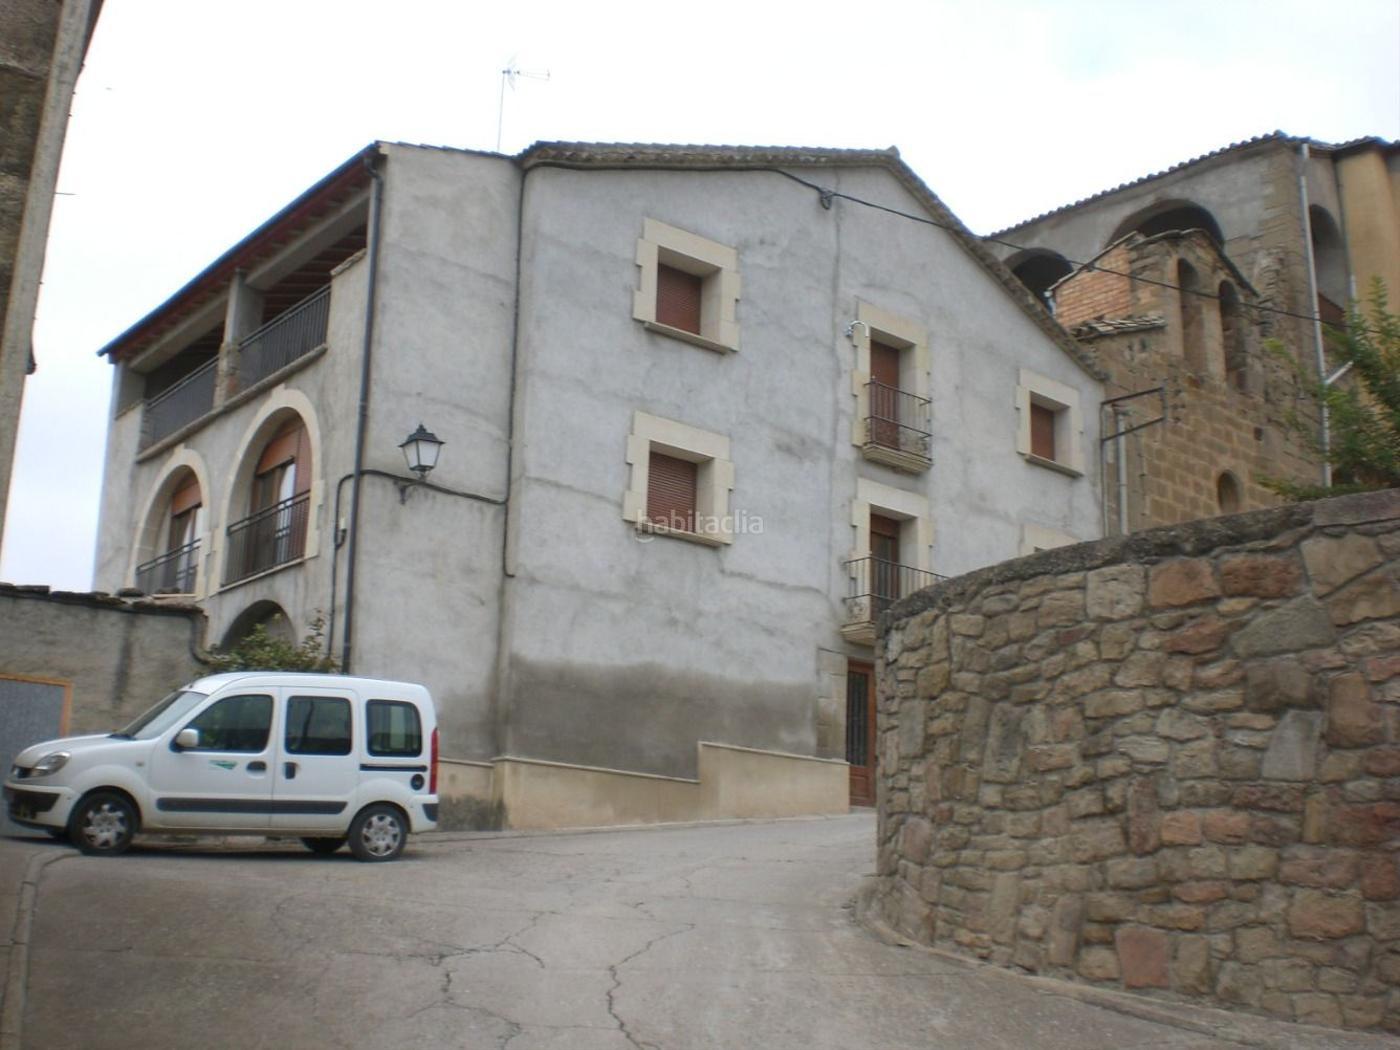 Imagen Vilanova de Meià